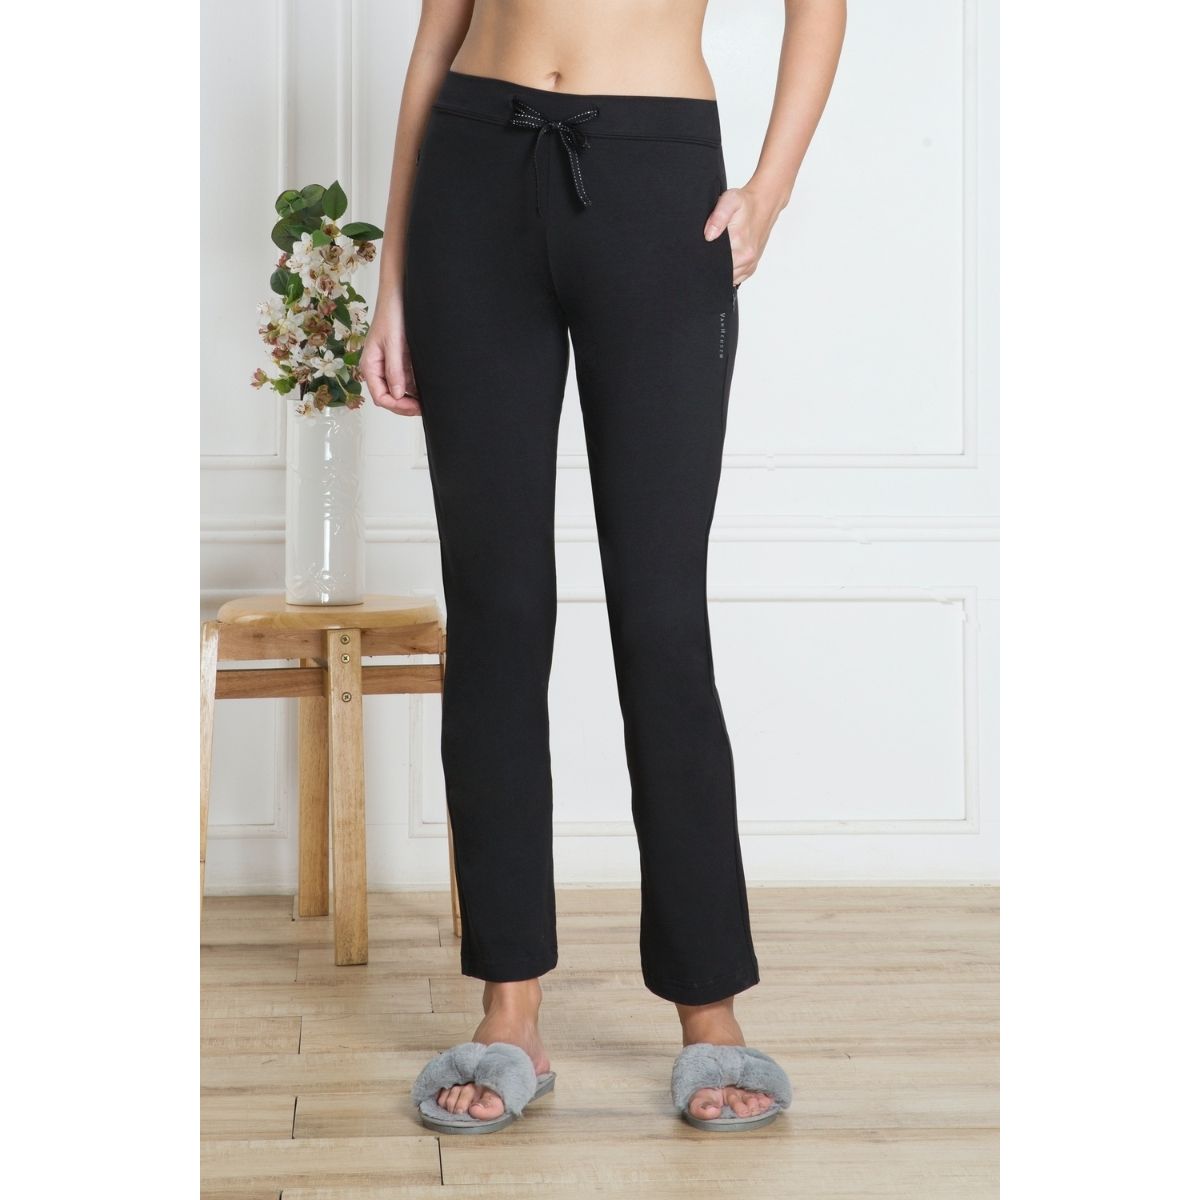 Seamless Fitnes Sports Yoga Pants Drawstring Strap Half Length Skirt Nine  Point Squat Proof Leggings Women With Pockets Trousers